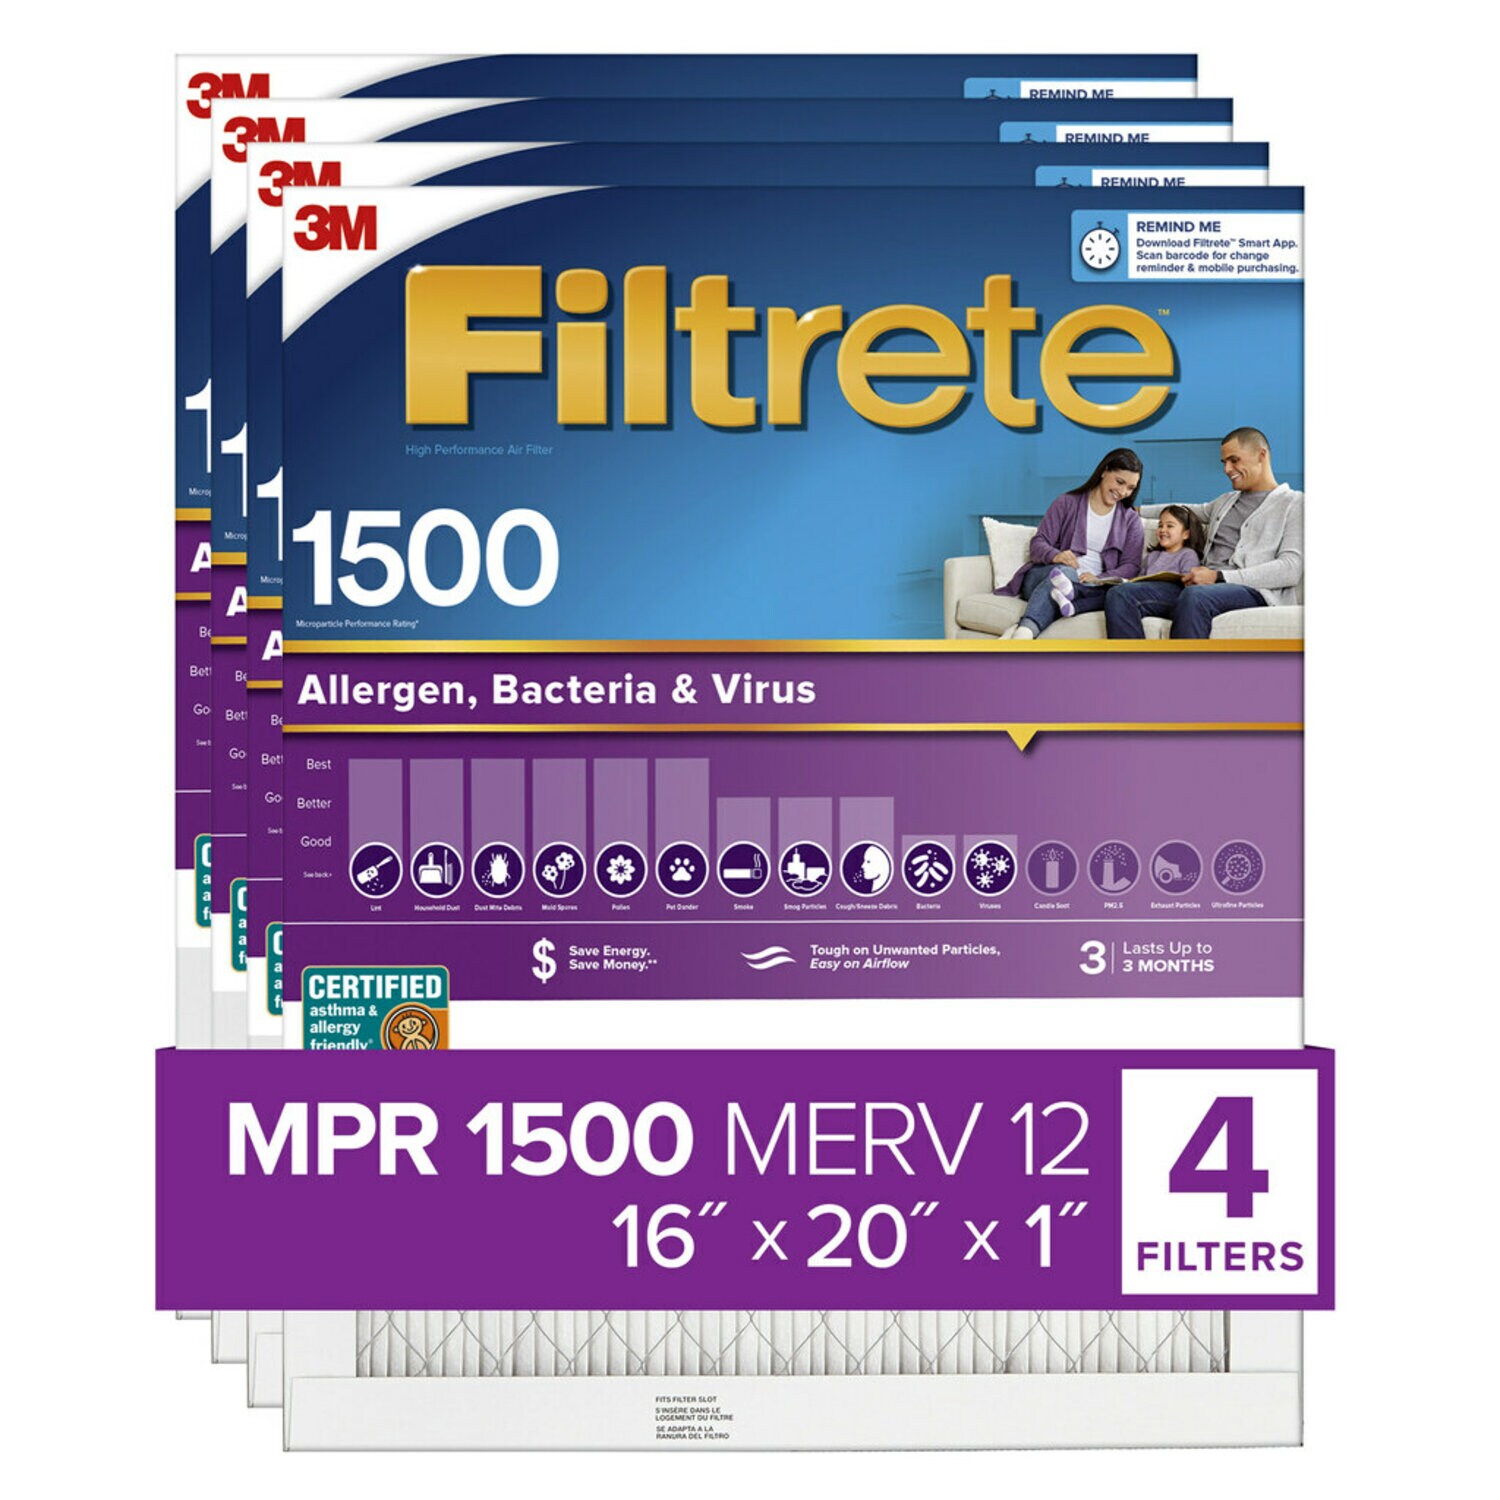 7100203142 - Filtrete Allergen, Bacteria & Virus Air Filter, 1500 MPR, 2000-4-HR, 16 in x 20 in x 1 in (40,6 cm x 50,8 cm x 2,5 cm)